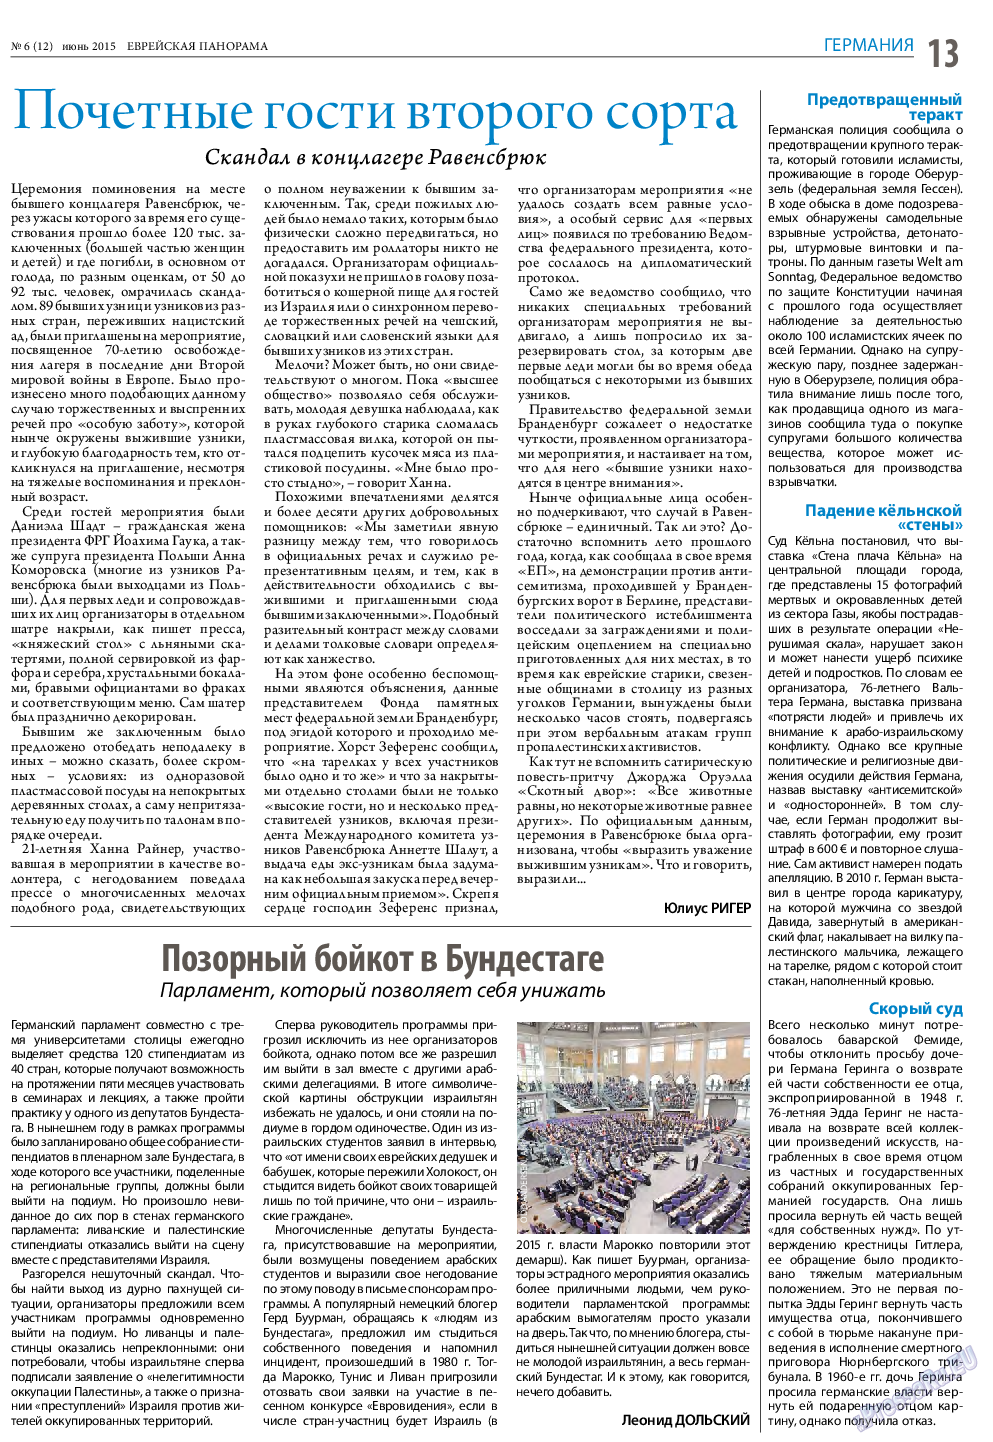 Еврейская панорама, газета. 2015 №6 стр.13